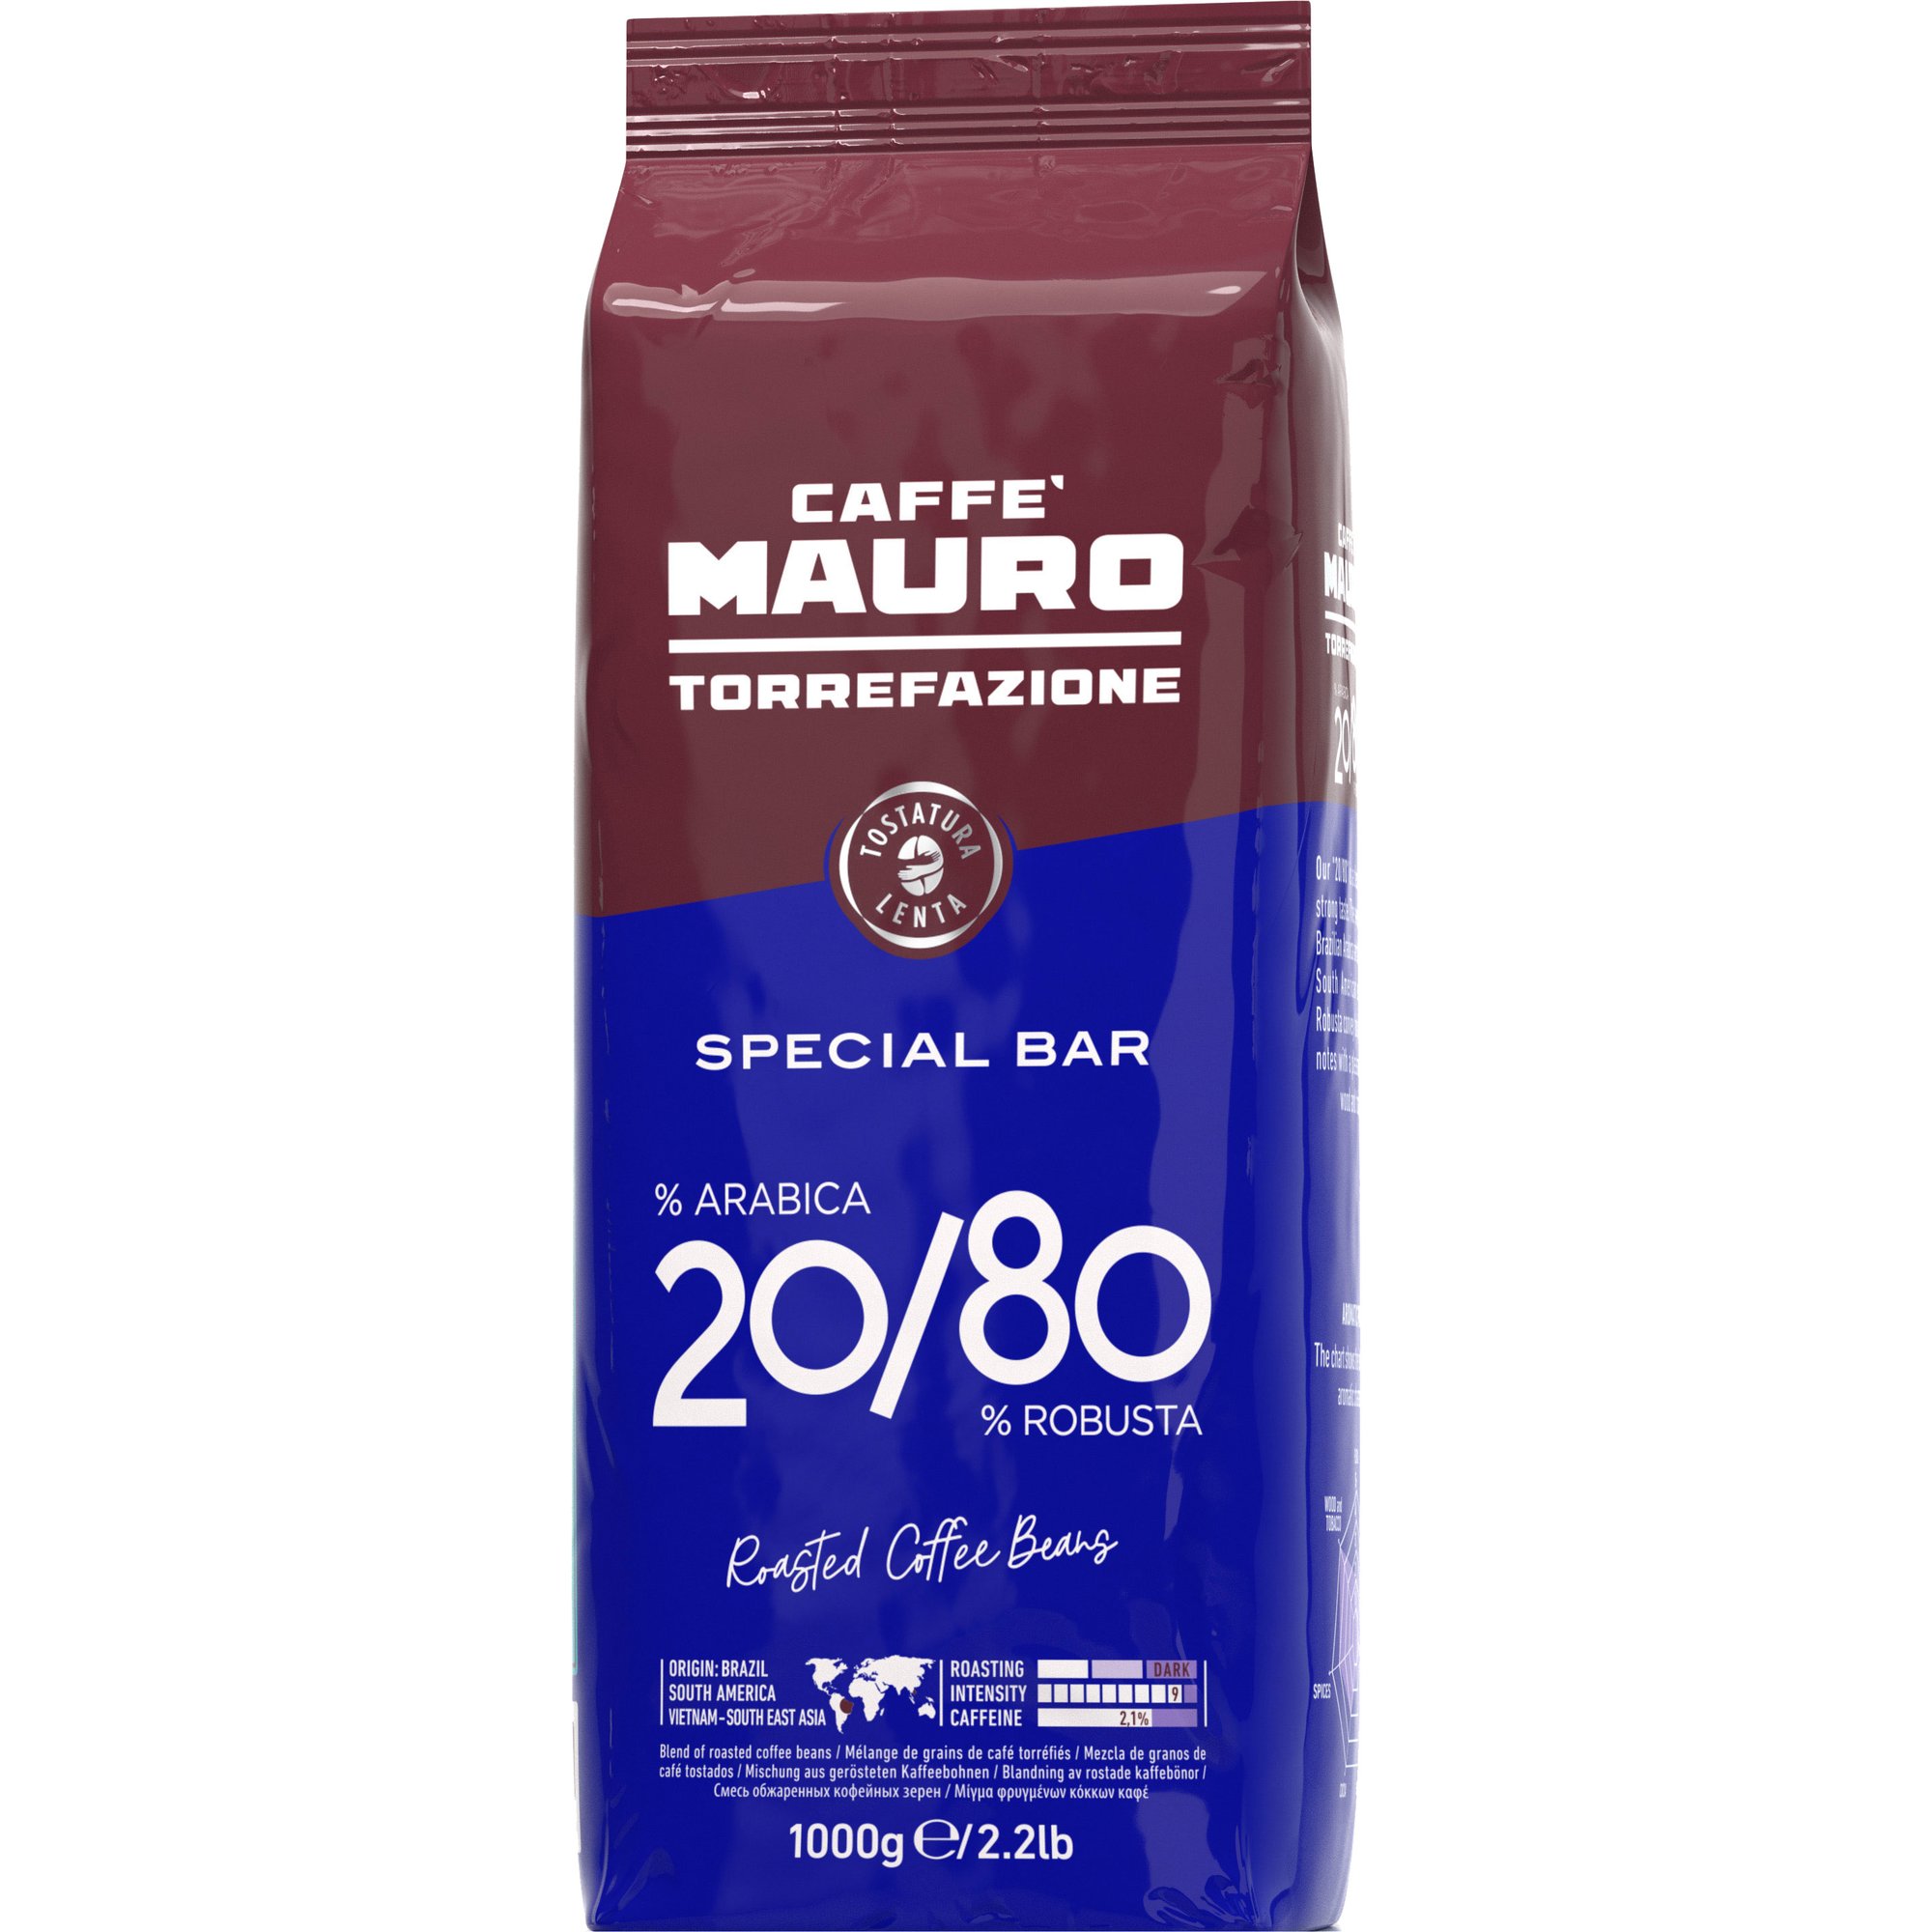 Caffè Mauro Special Bar 1 kg hela bönor